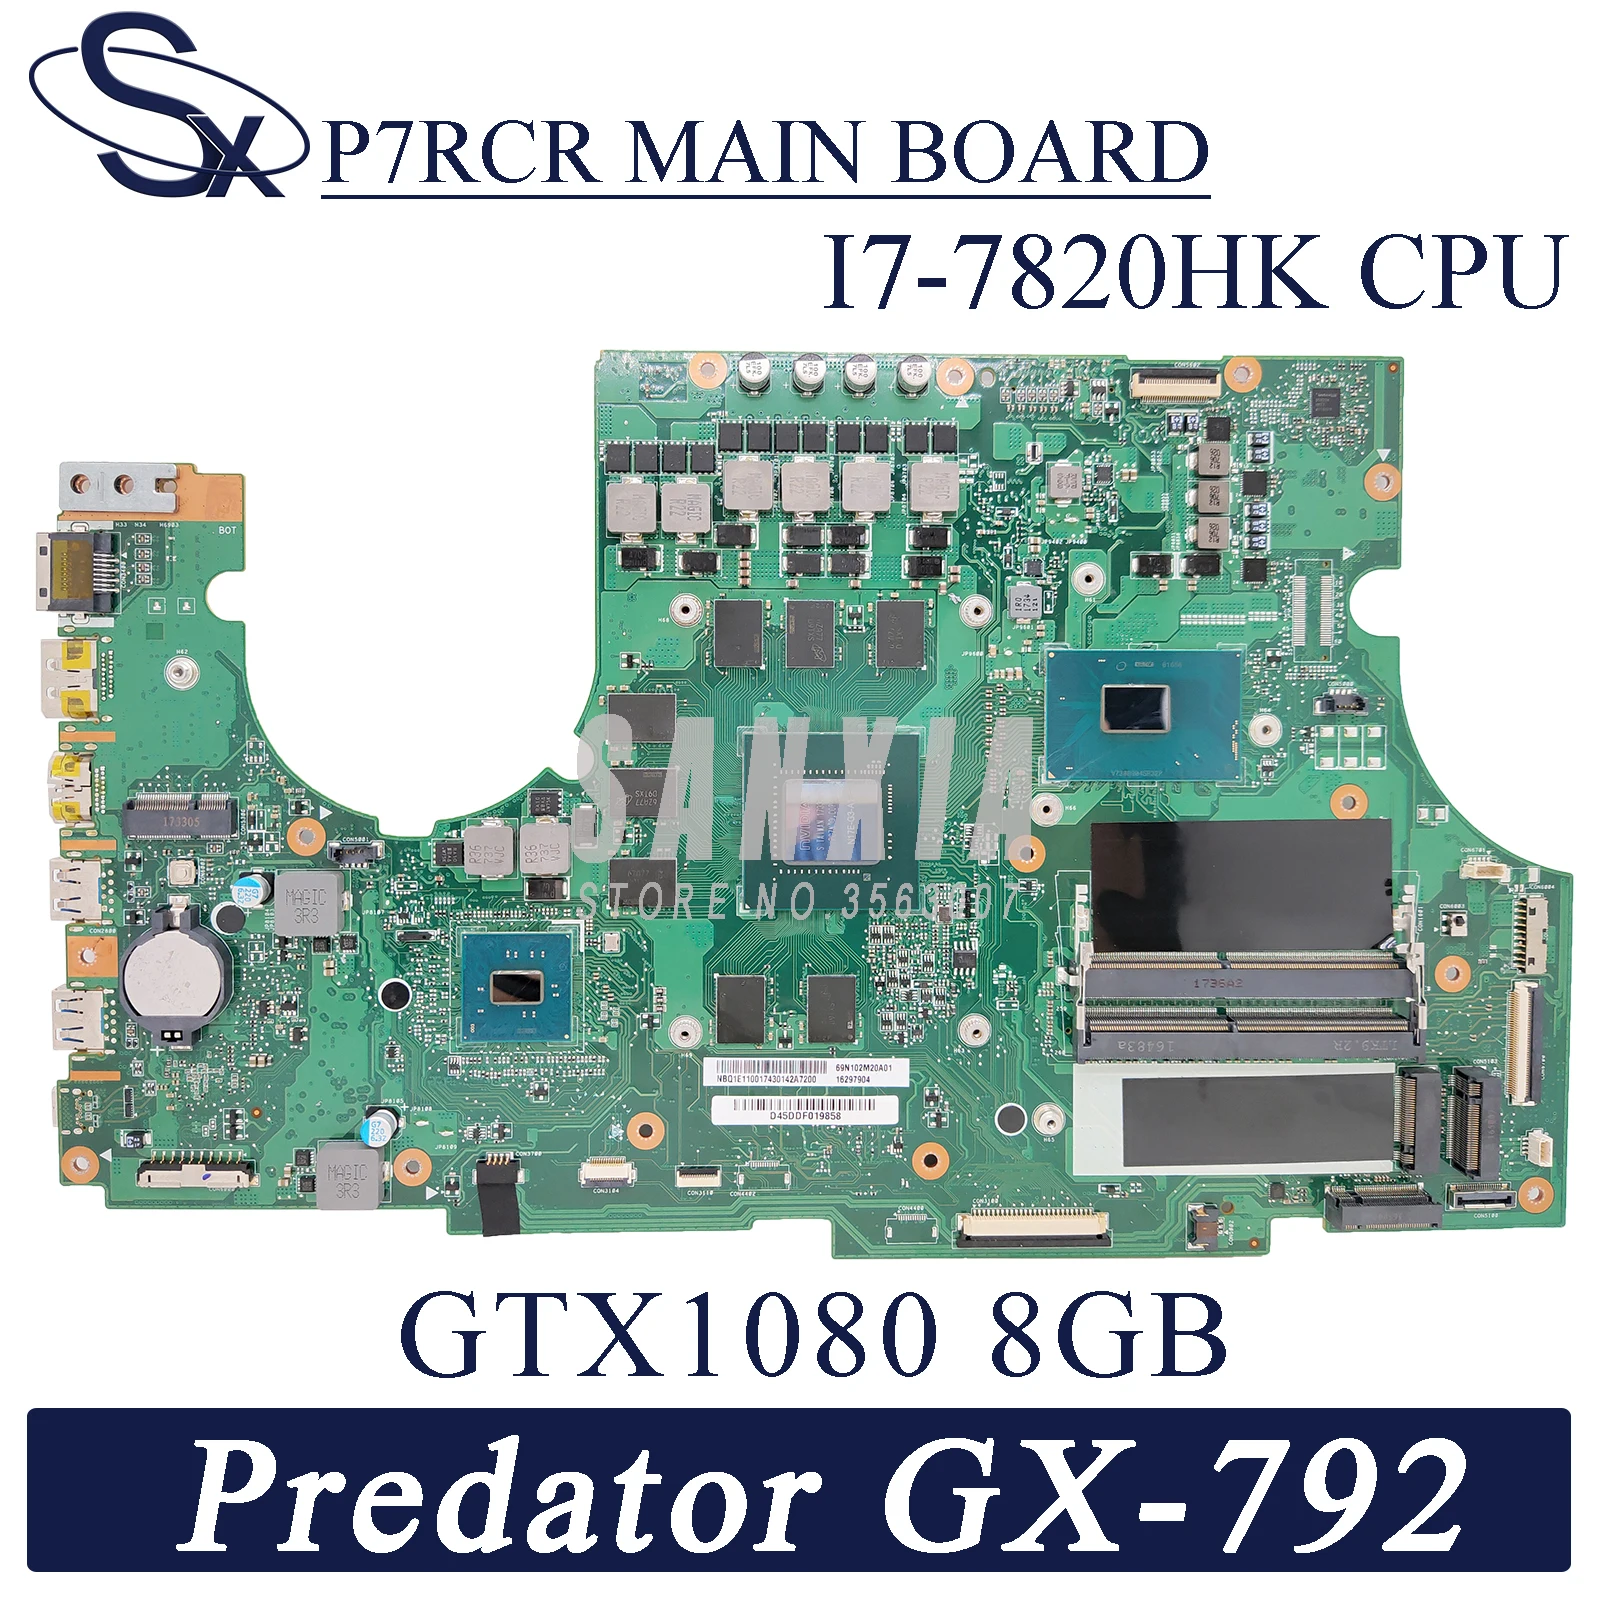 

KEFU P7RCR Laptop motherboard for Acer Predator 17 X GX-792 original mainboard Onboard I7-7820HK GTX1080-8GB